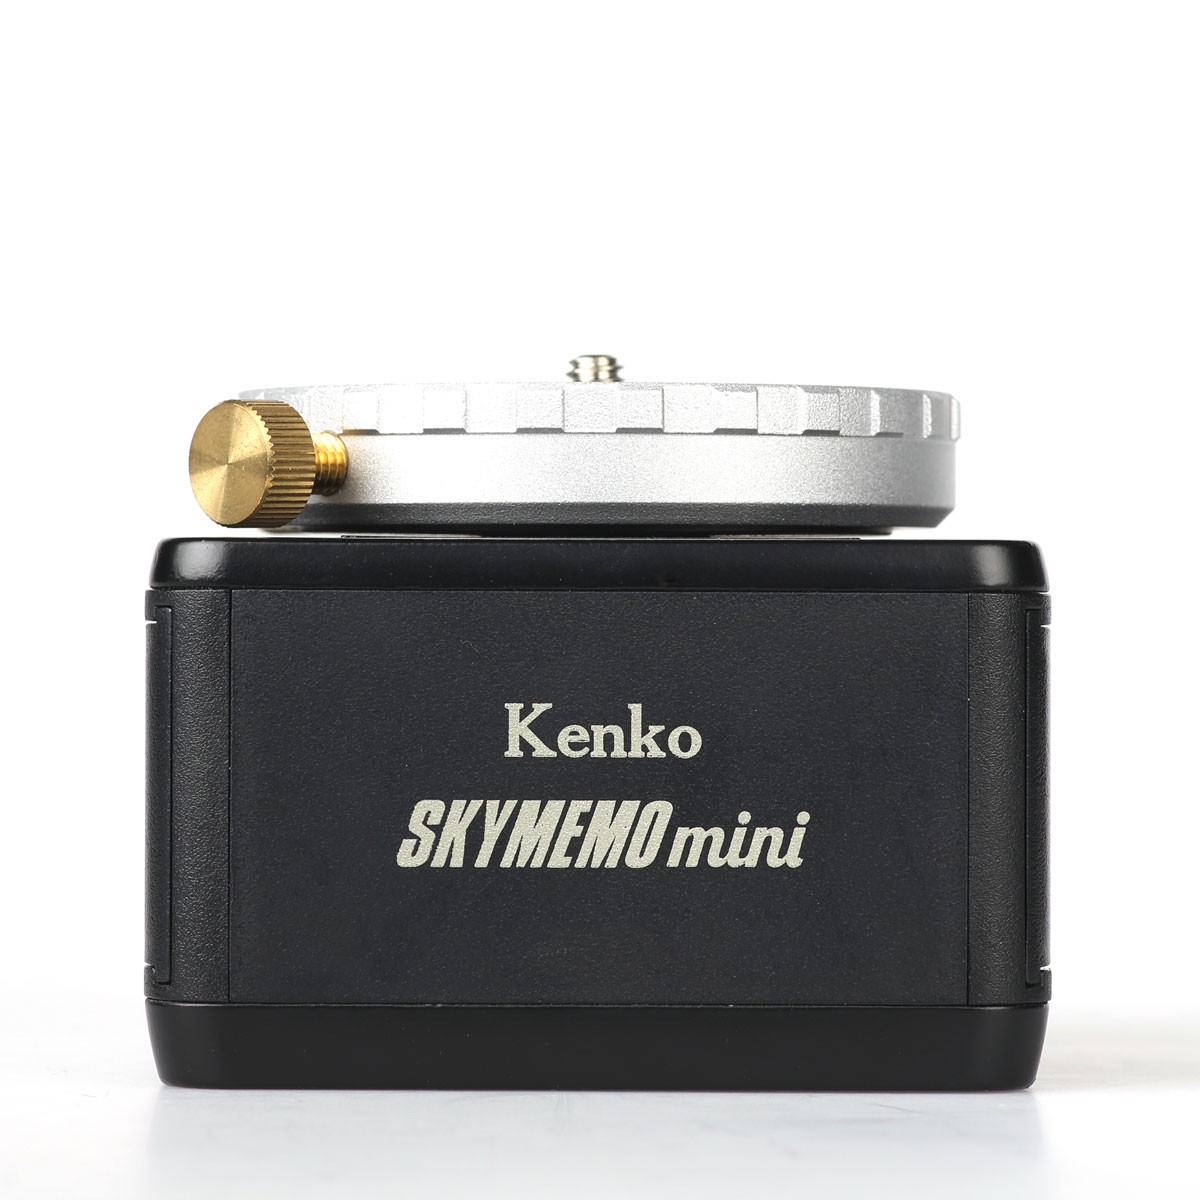 Kenko Global - SKYMEMO mini Portable Tracking Platform